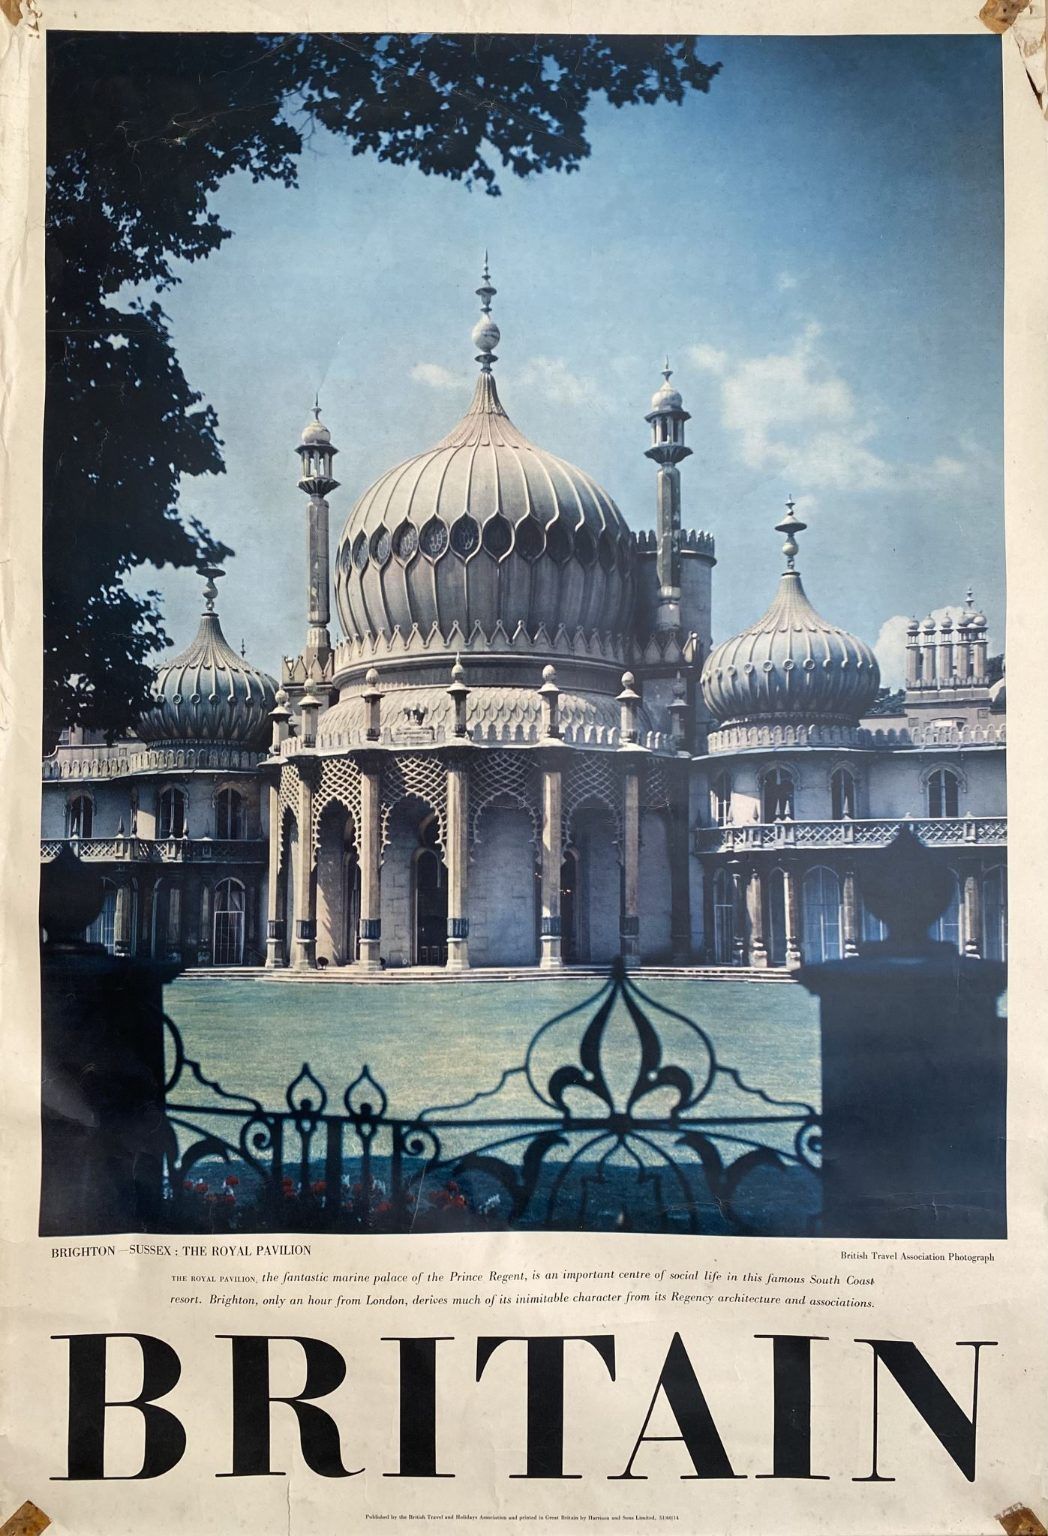 VINTAGE POSTER: BRITAIN - Brighton - Sussex: The Royal Pavilion